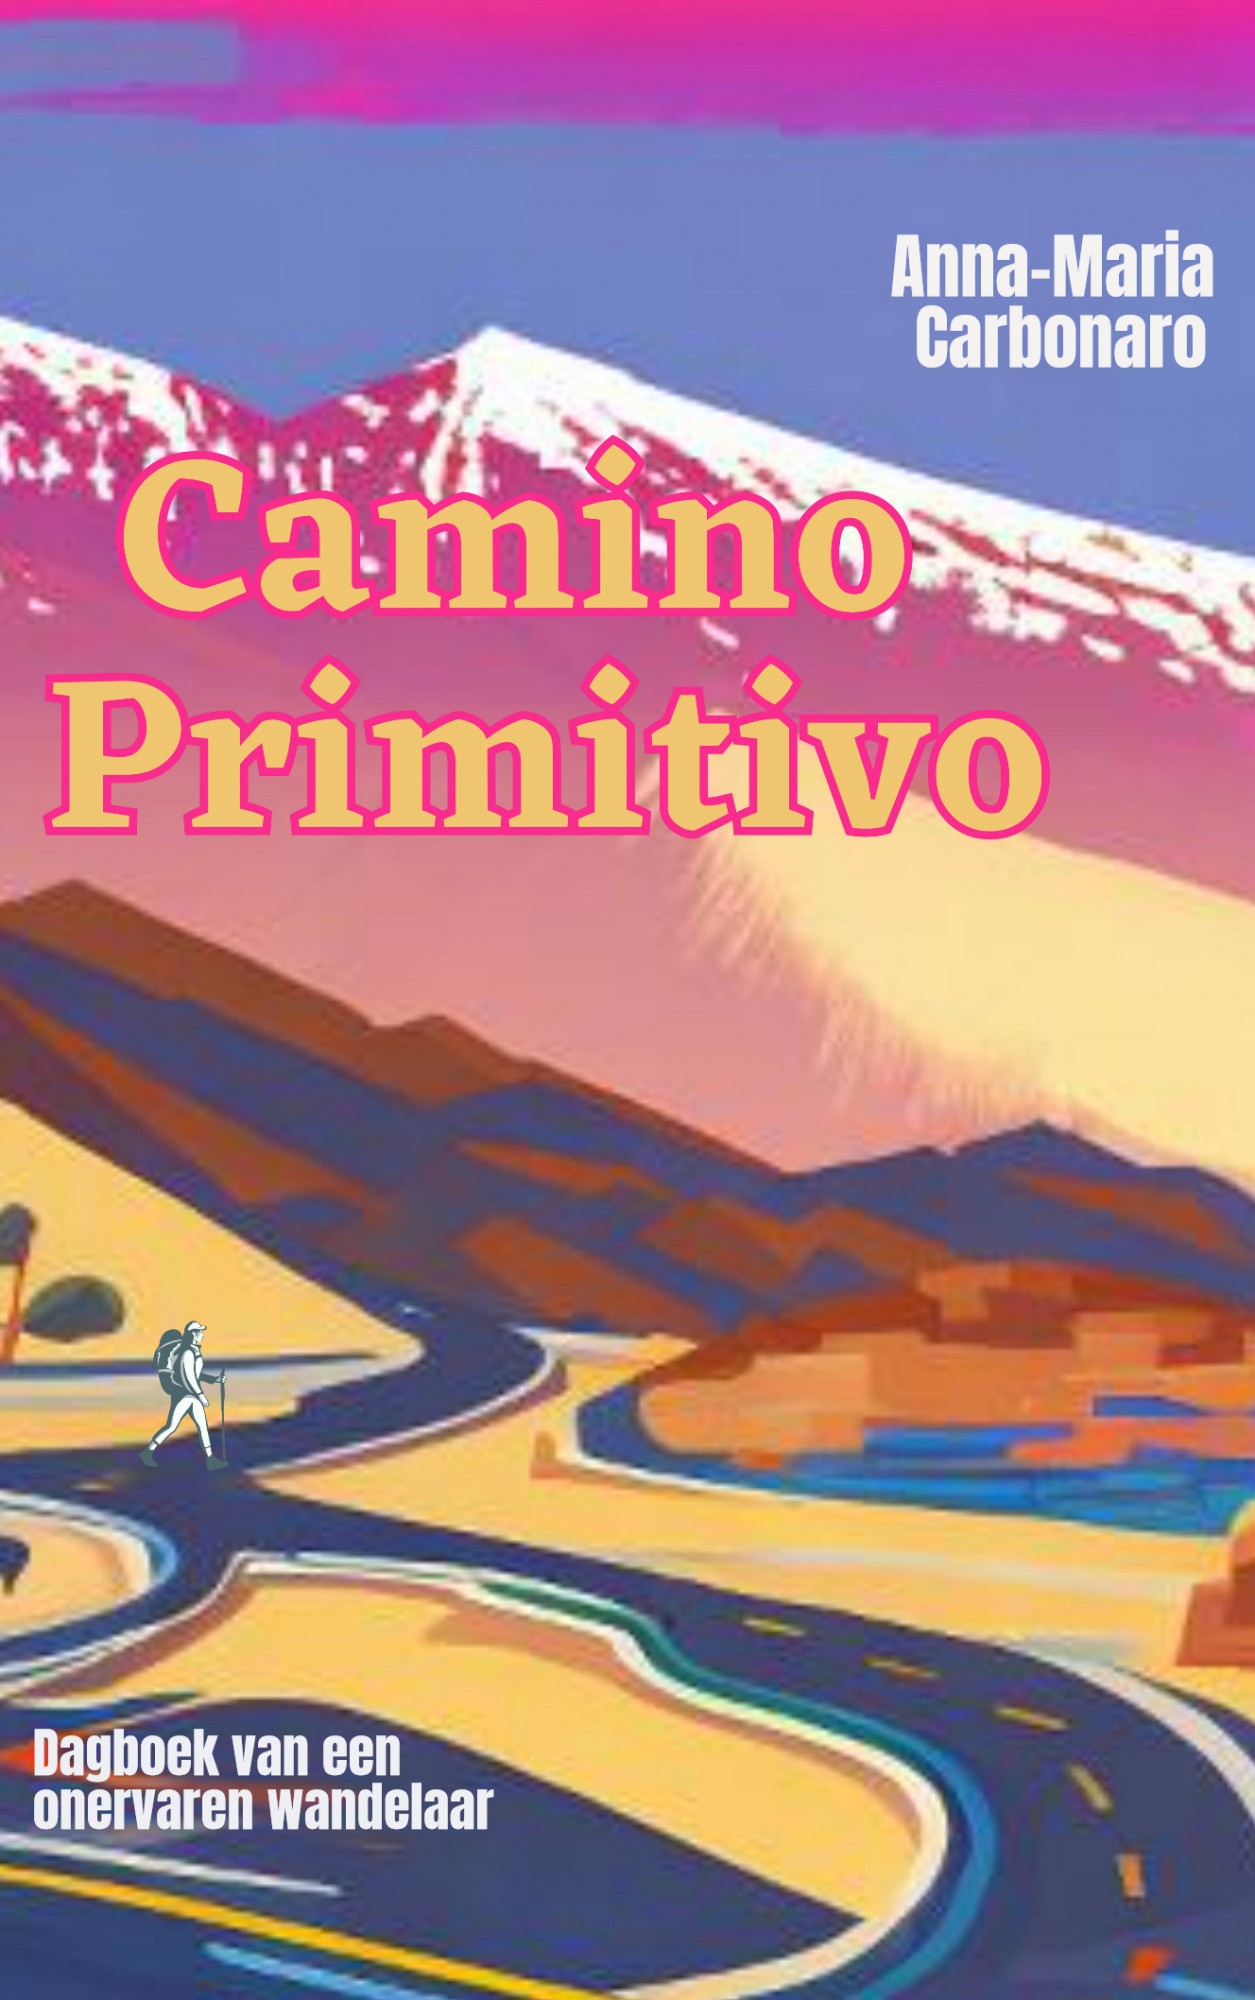 Carbonaro, Anna-Maria-Camino Primitivo